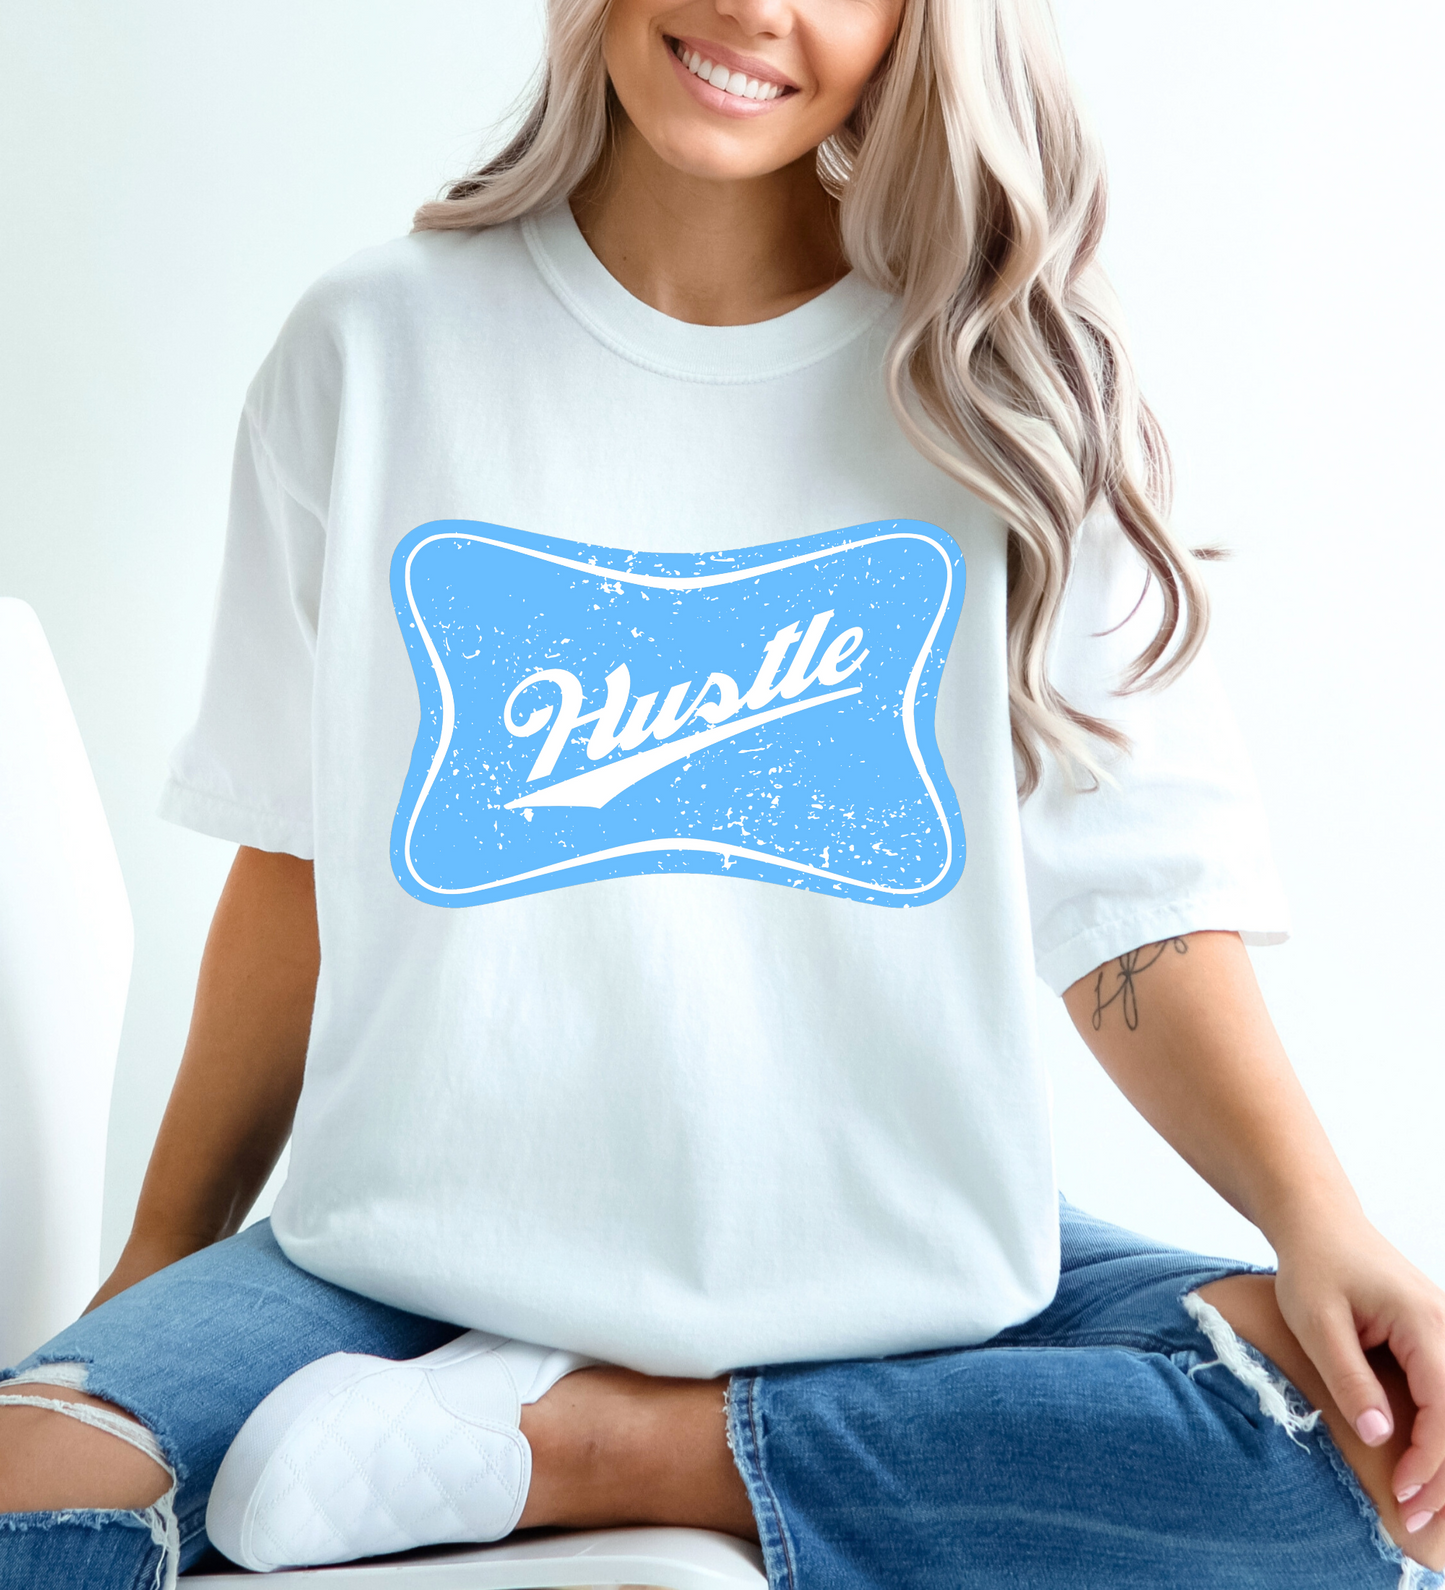 Hustle Cheers Logo BLUE (Comfort Colors)